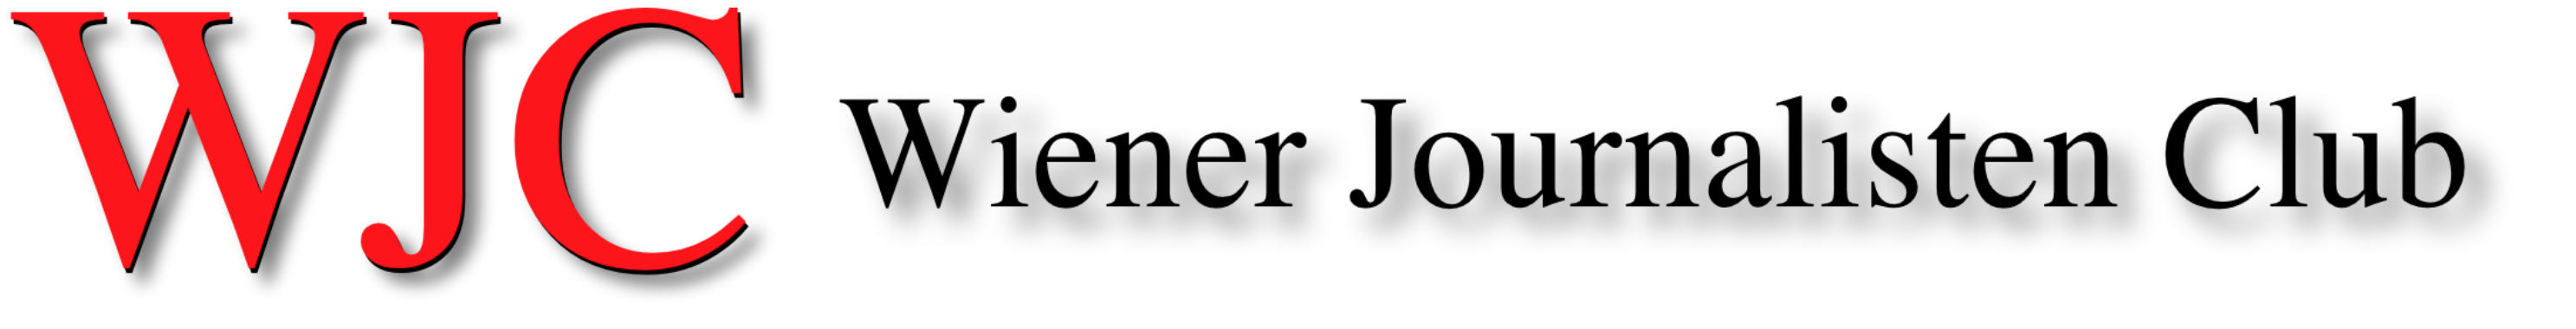 Wiener Journalisten Club